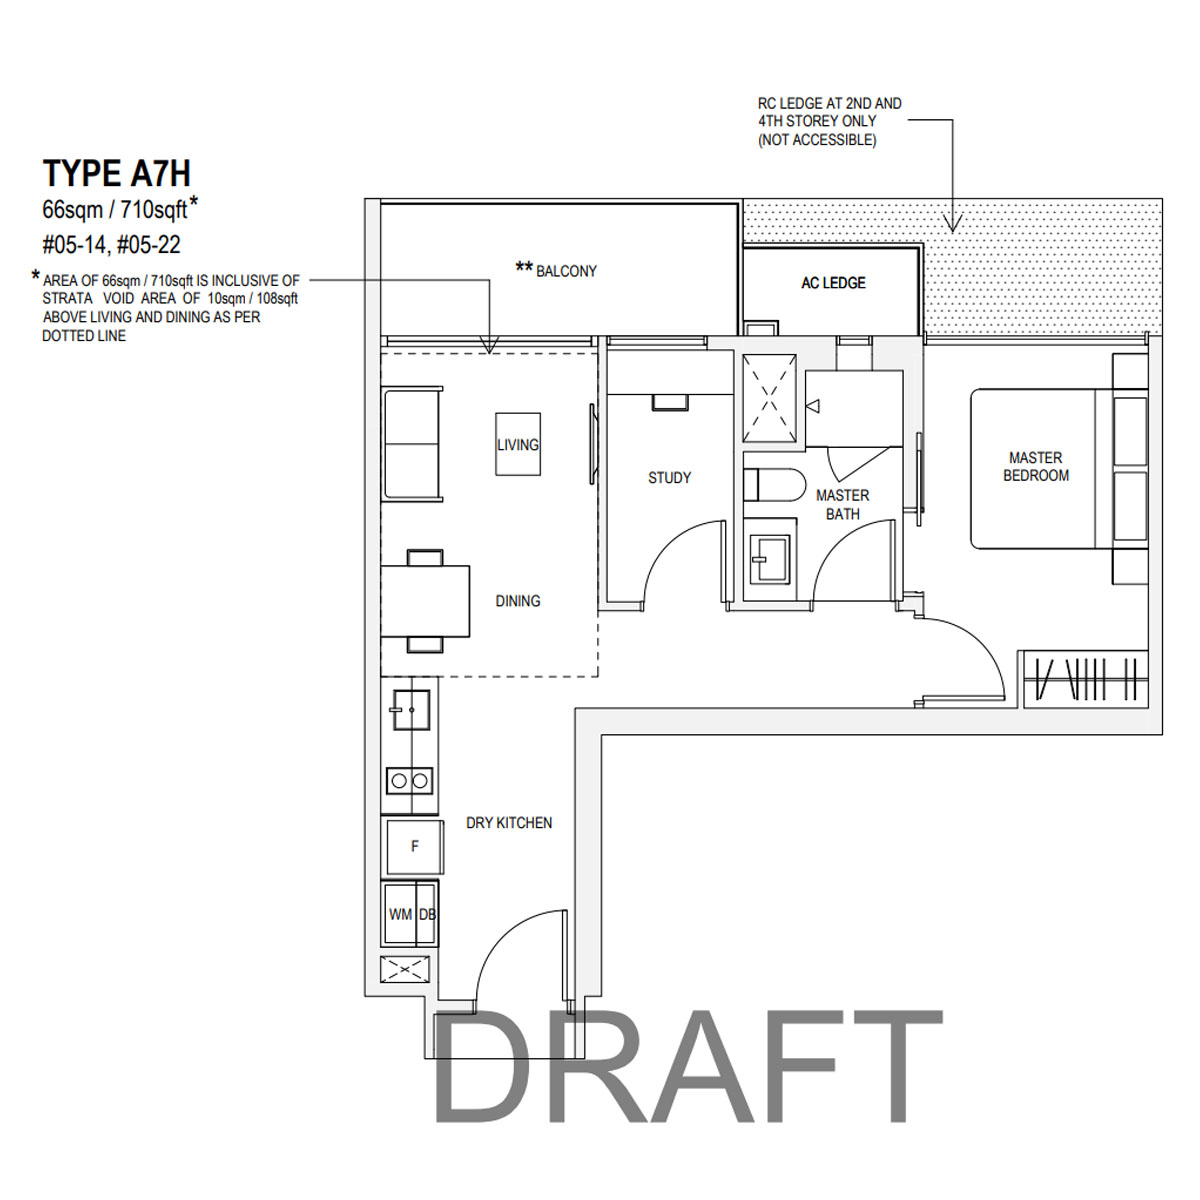 The Verandah Residences Units Mix and Floor Plans